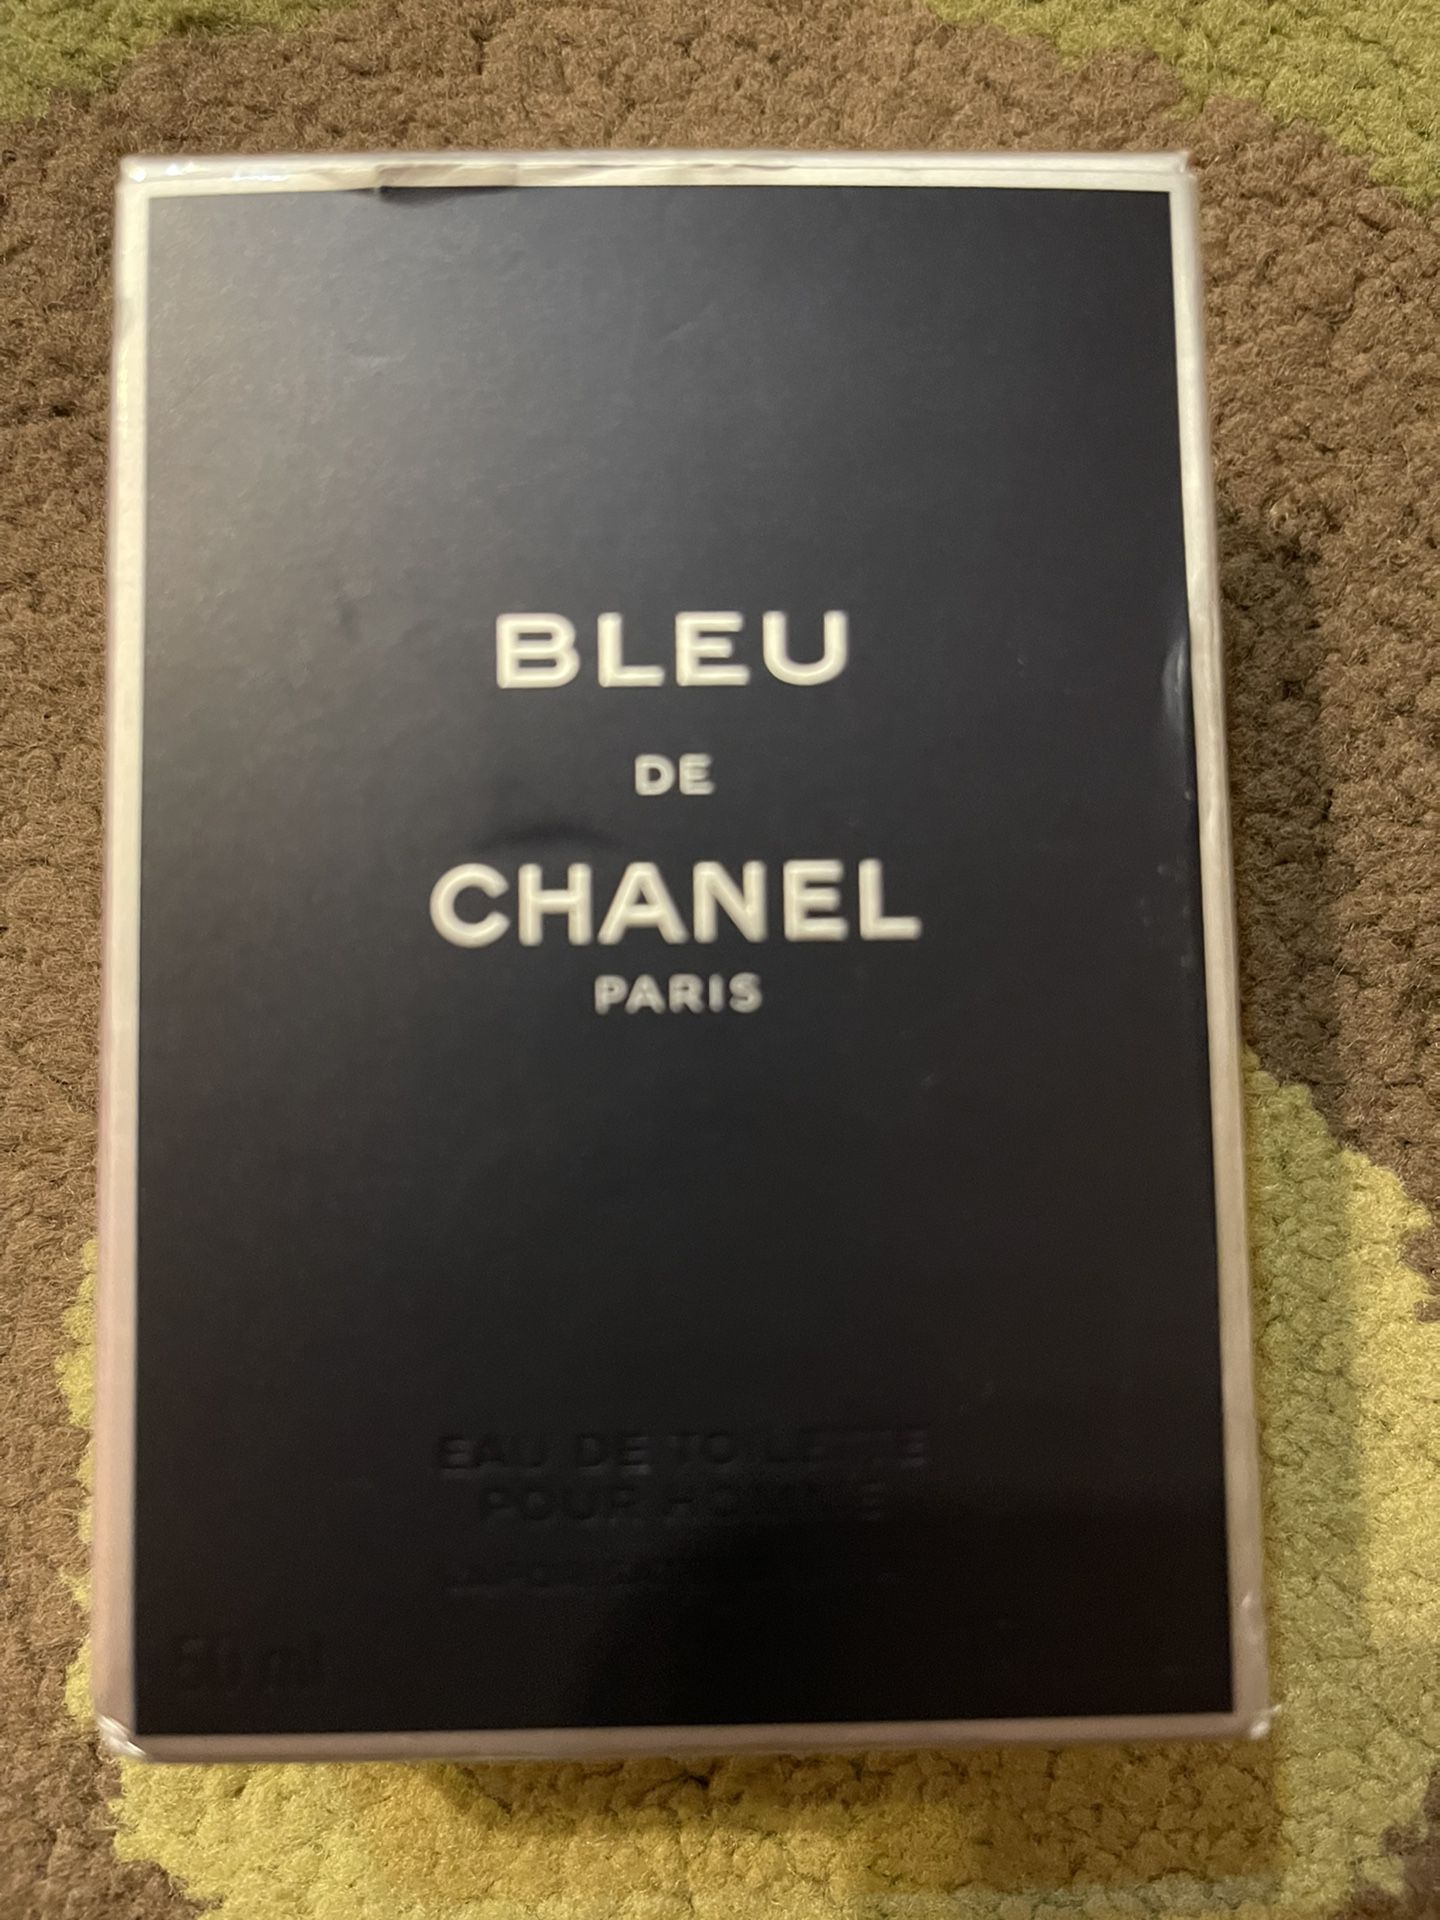 BLEU DE CHANEL PARIS 50 Ml 1.7FLOZ Made in France for your